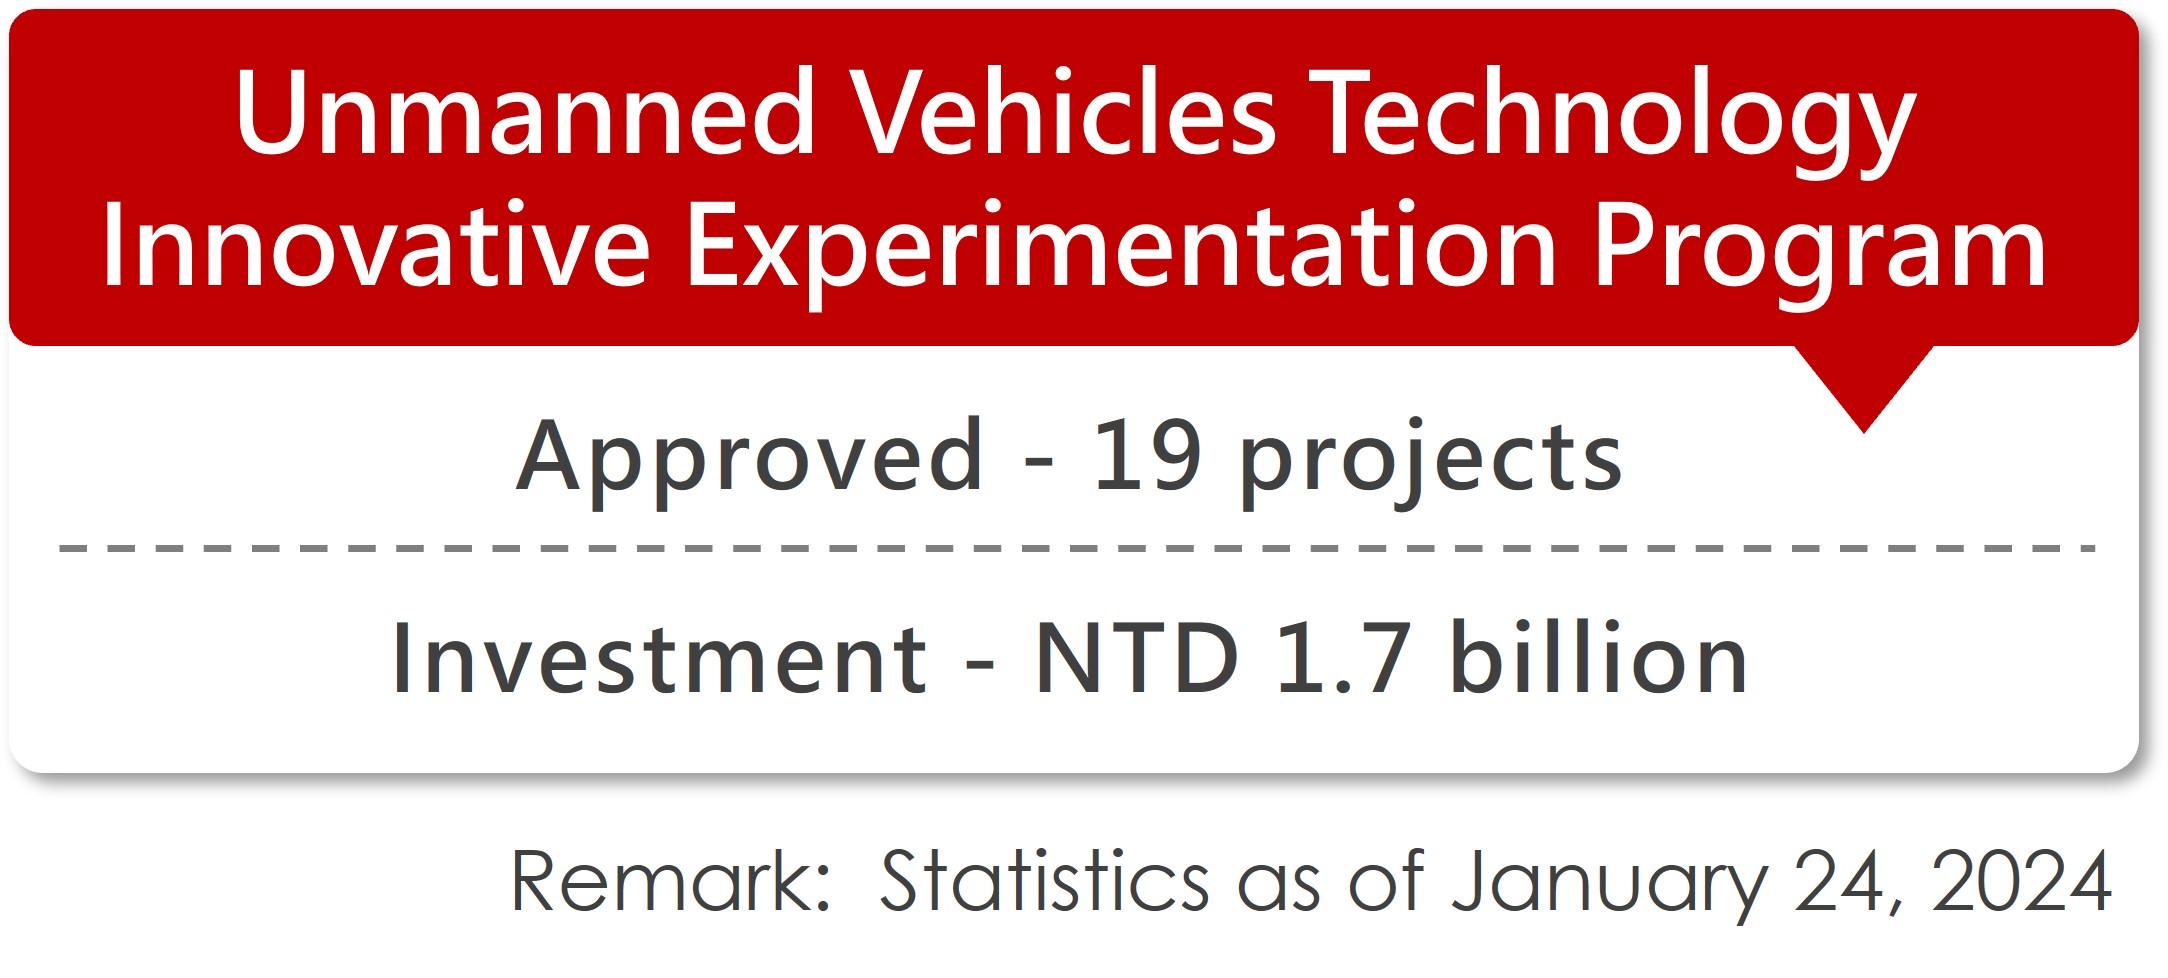 Achievements of Unmanned Vehicles Technology Innovative Experimentation Program